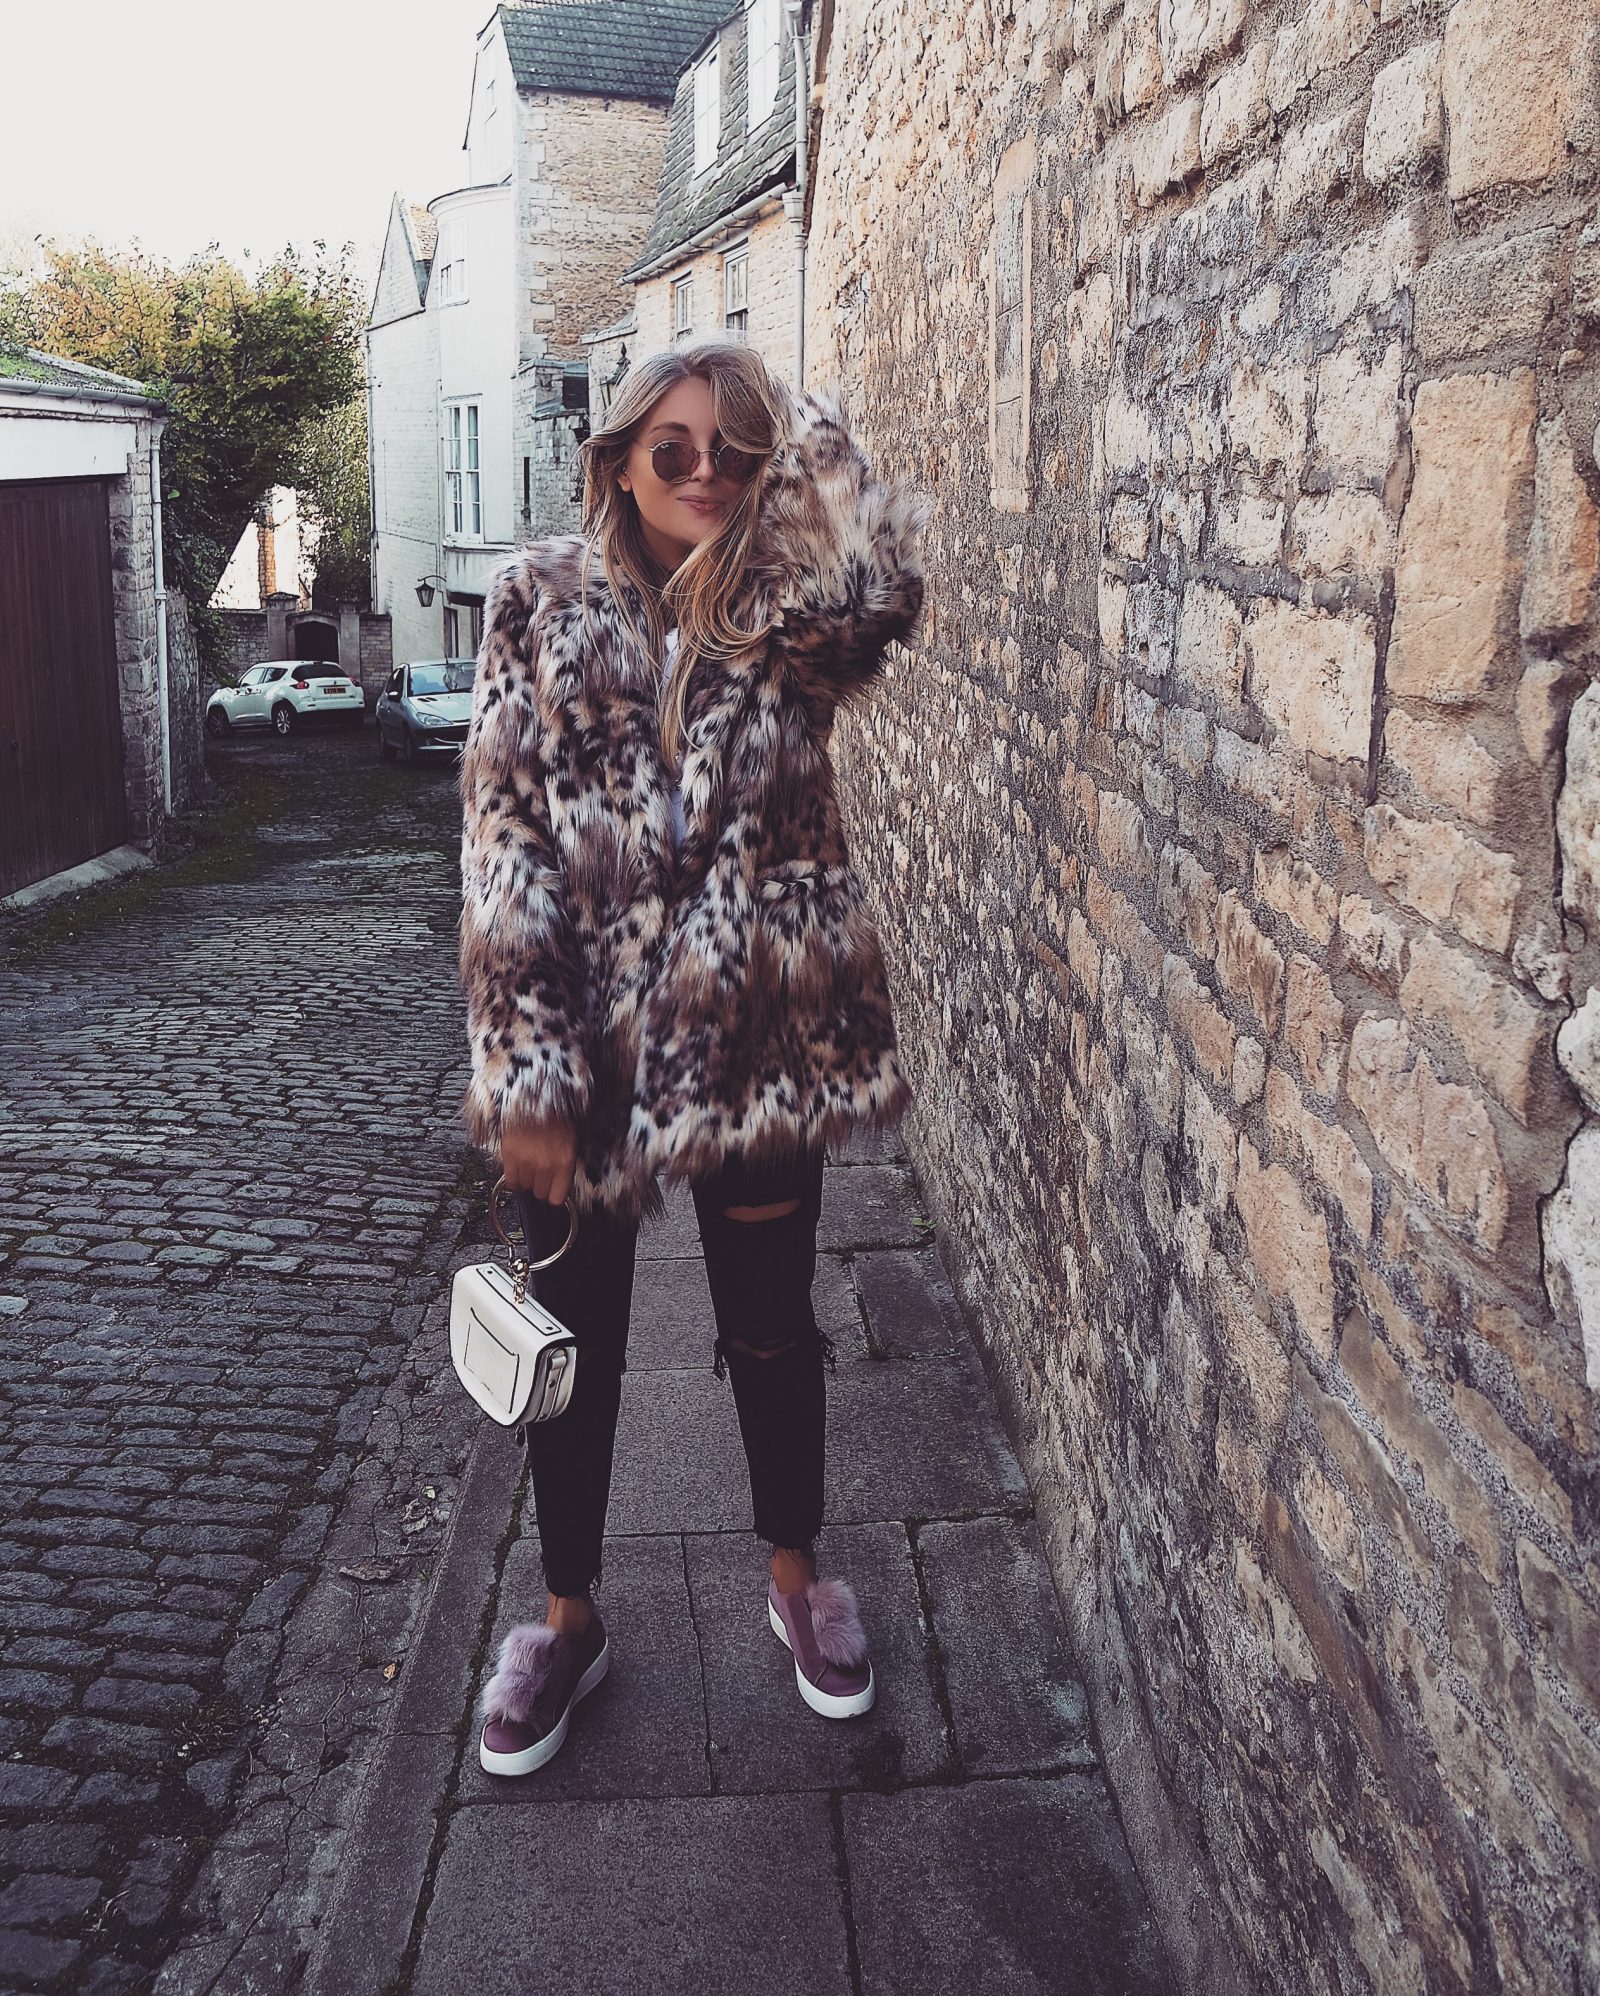 Leopard Print Coat - Fashion Blogger Street Style